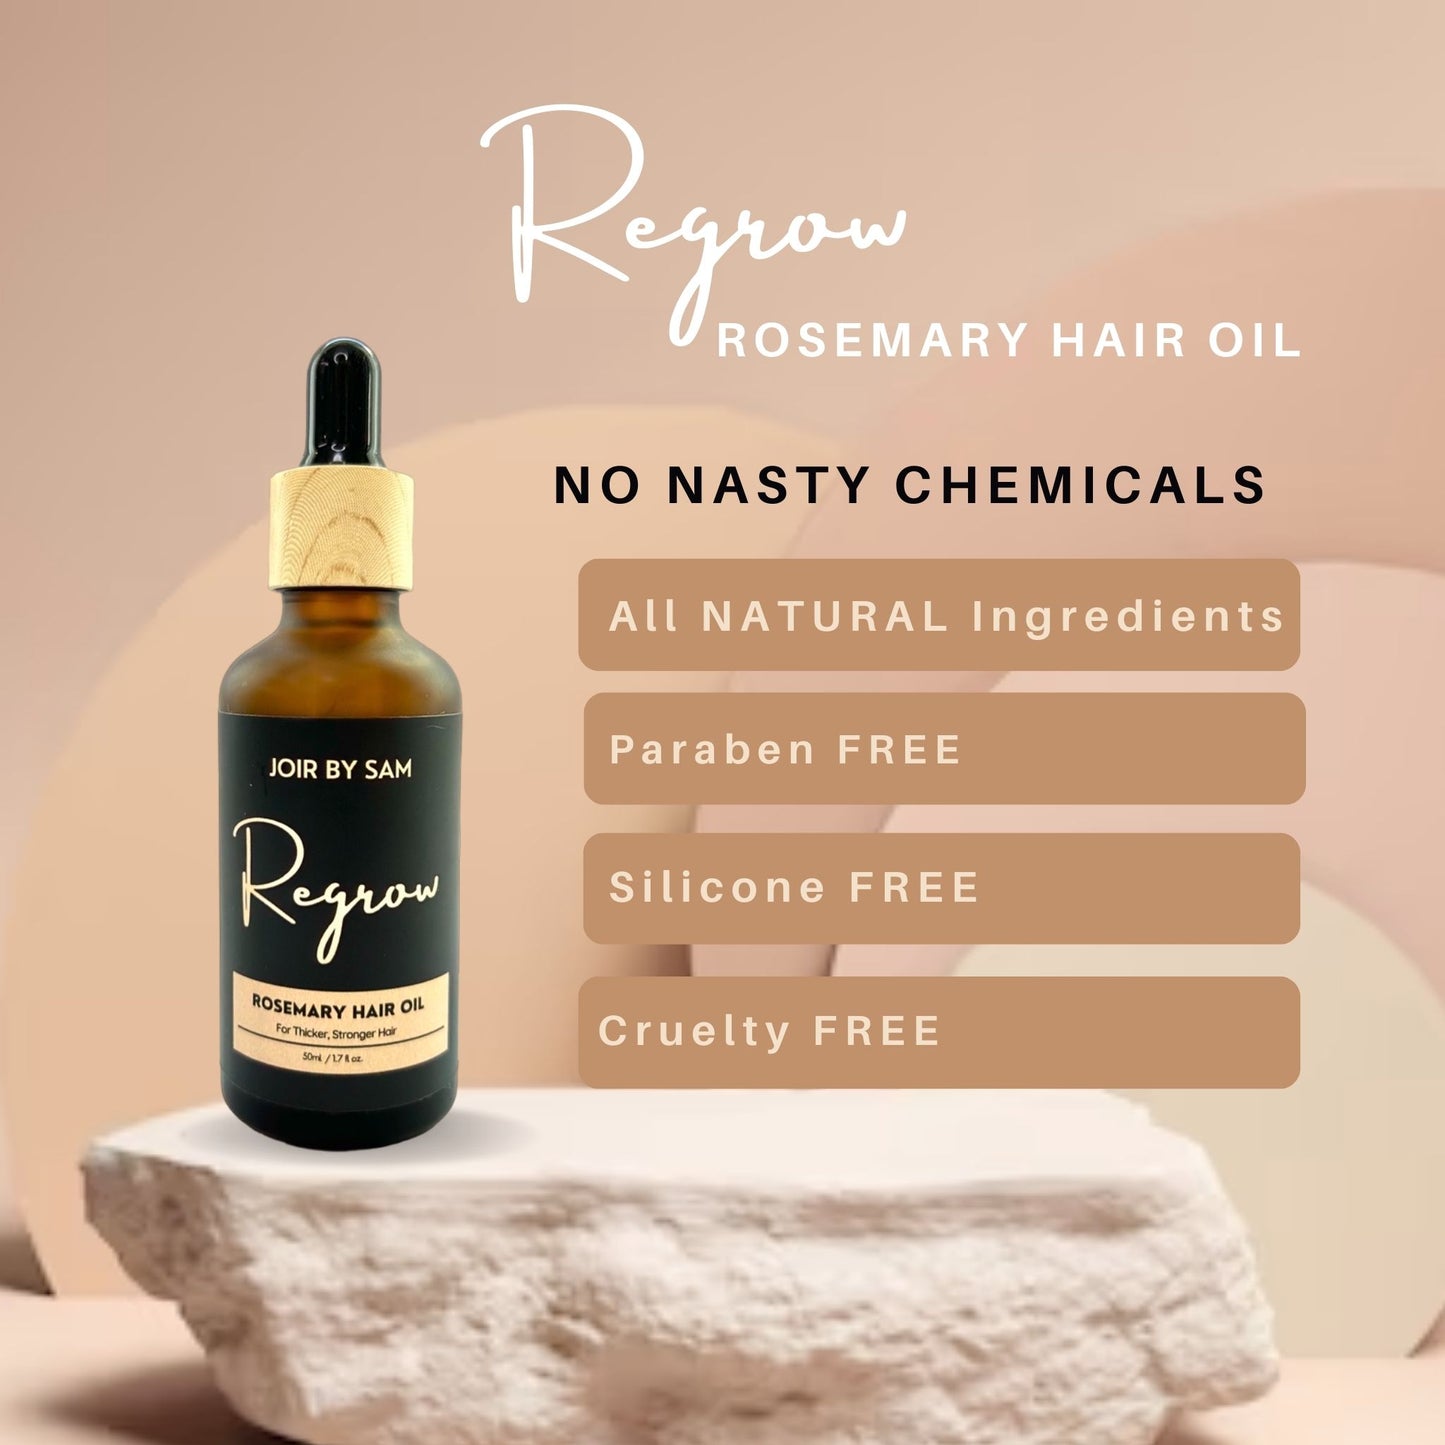 Regrow Rosemary Hair Oil